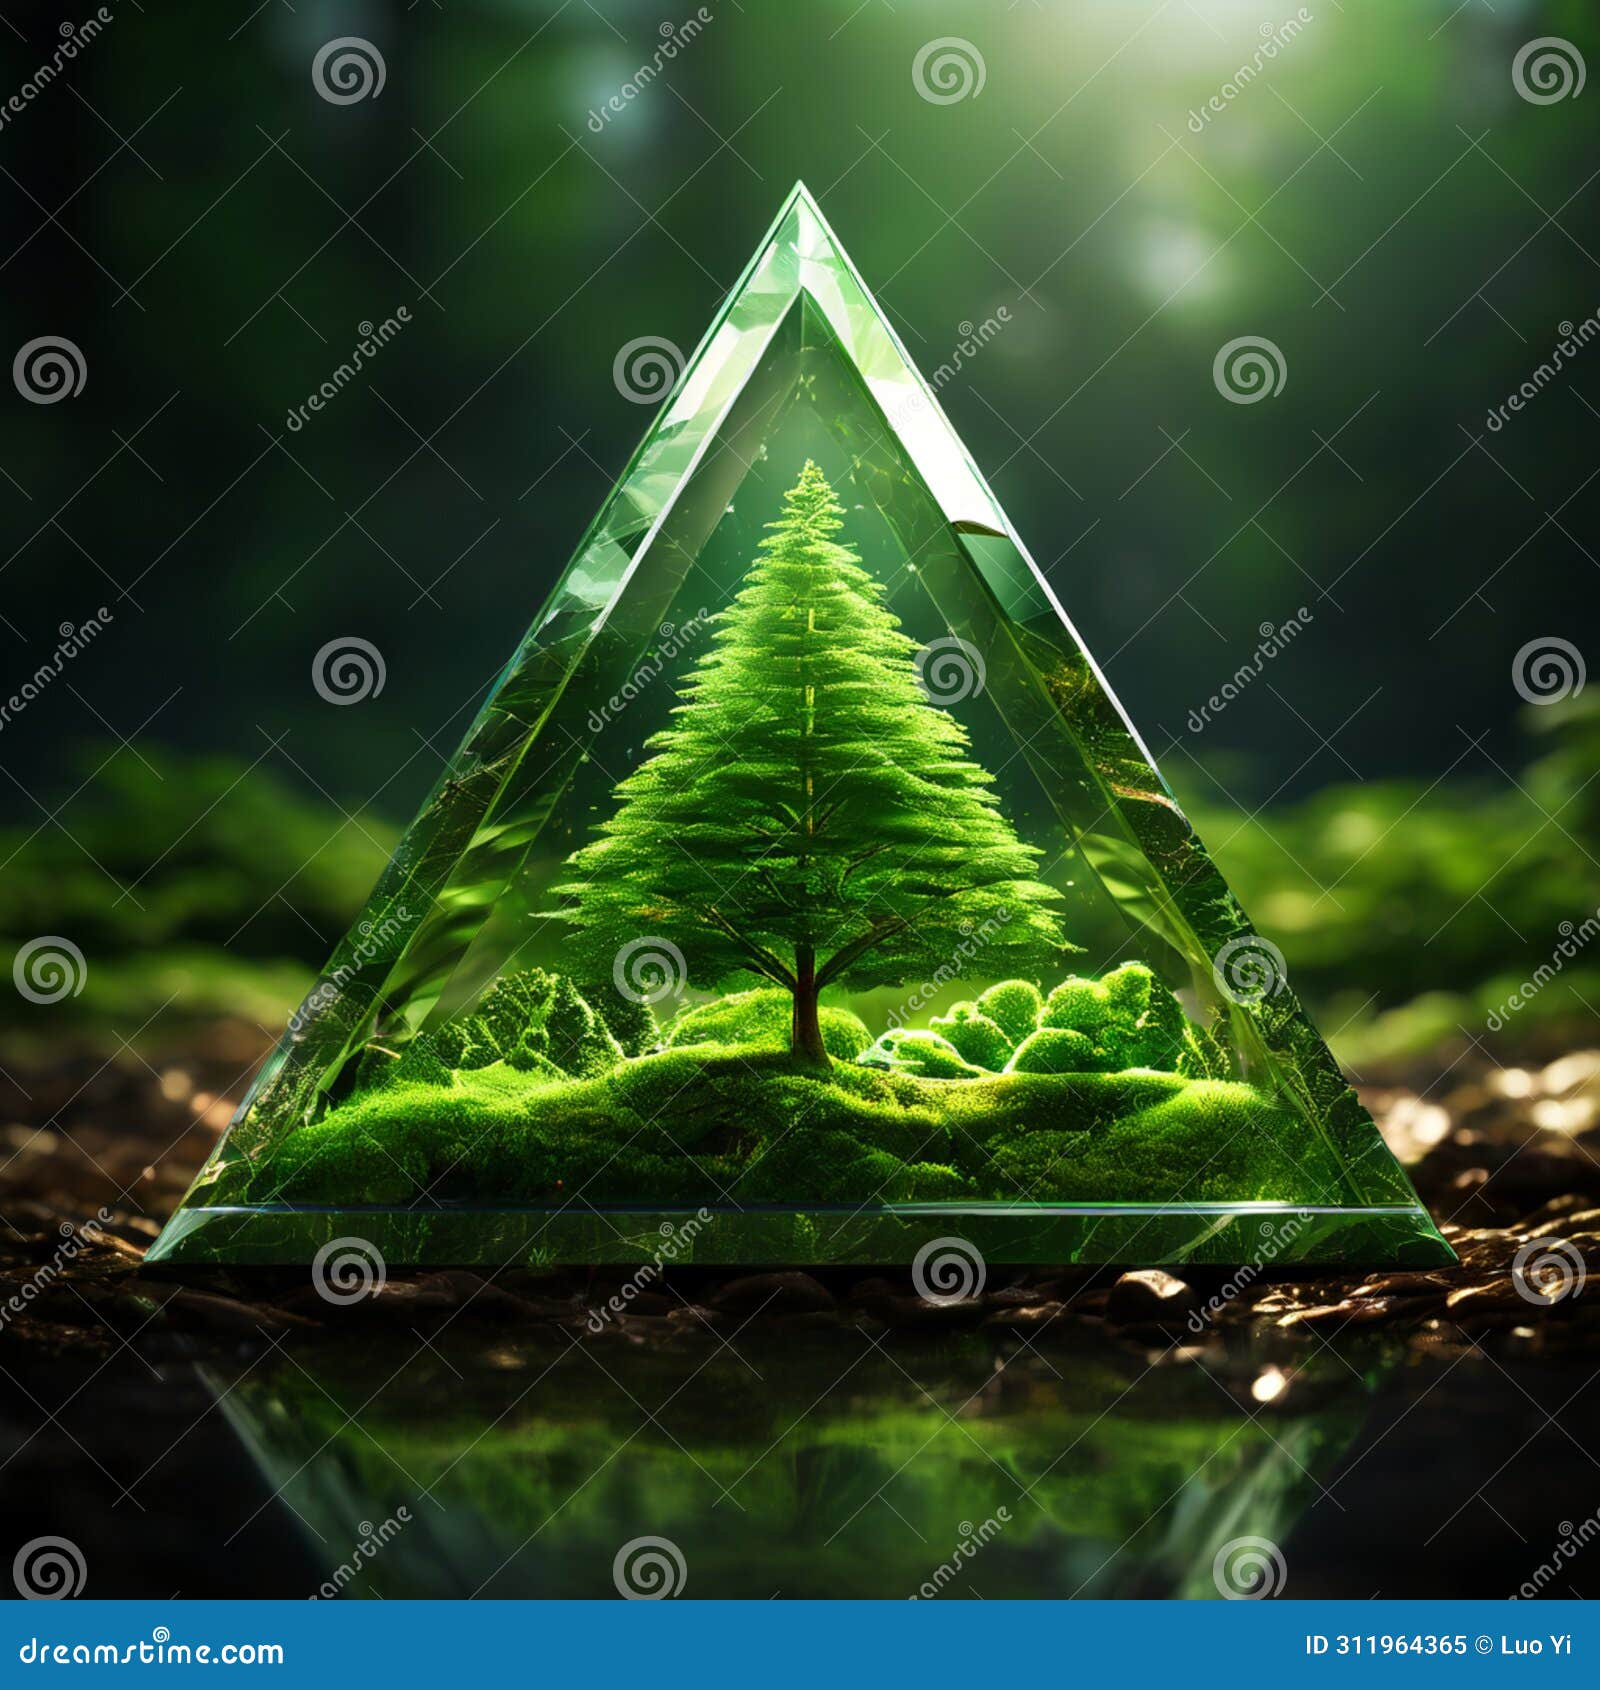 green energy triangle